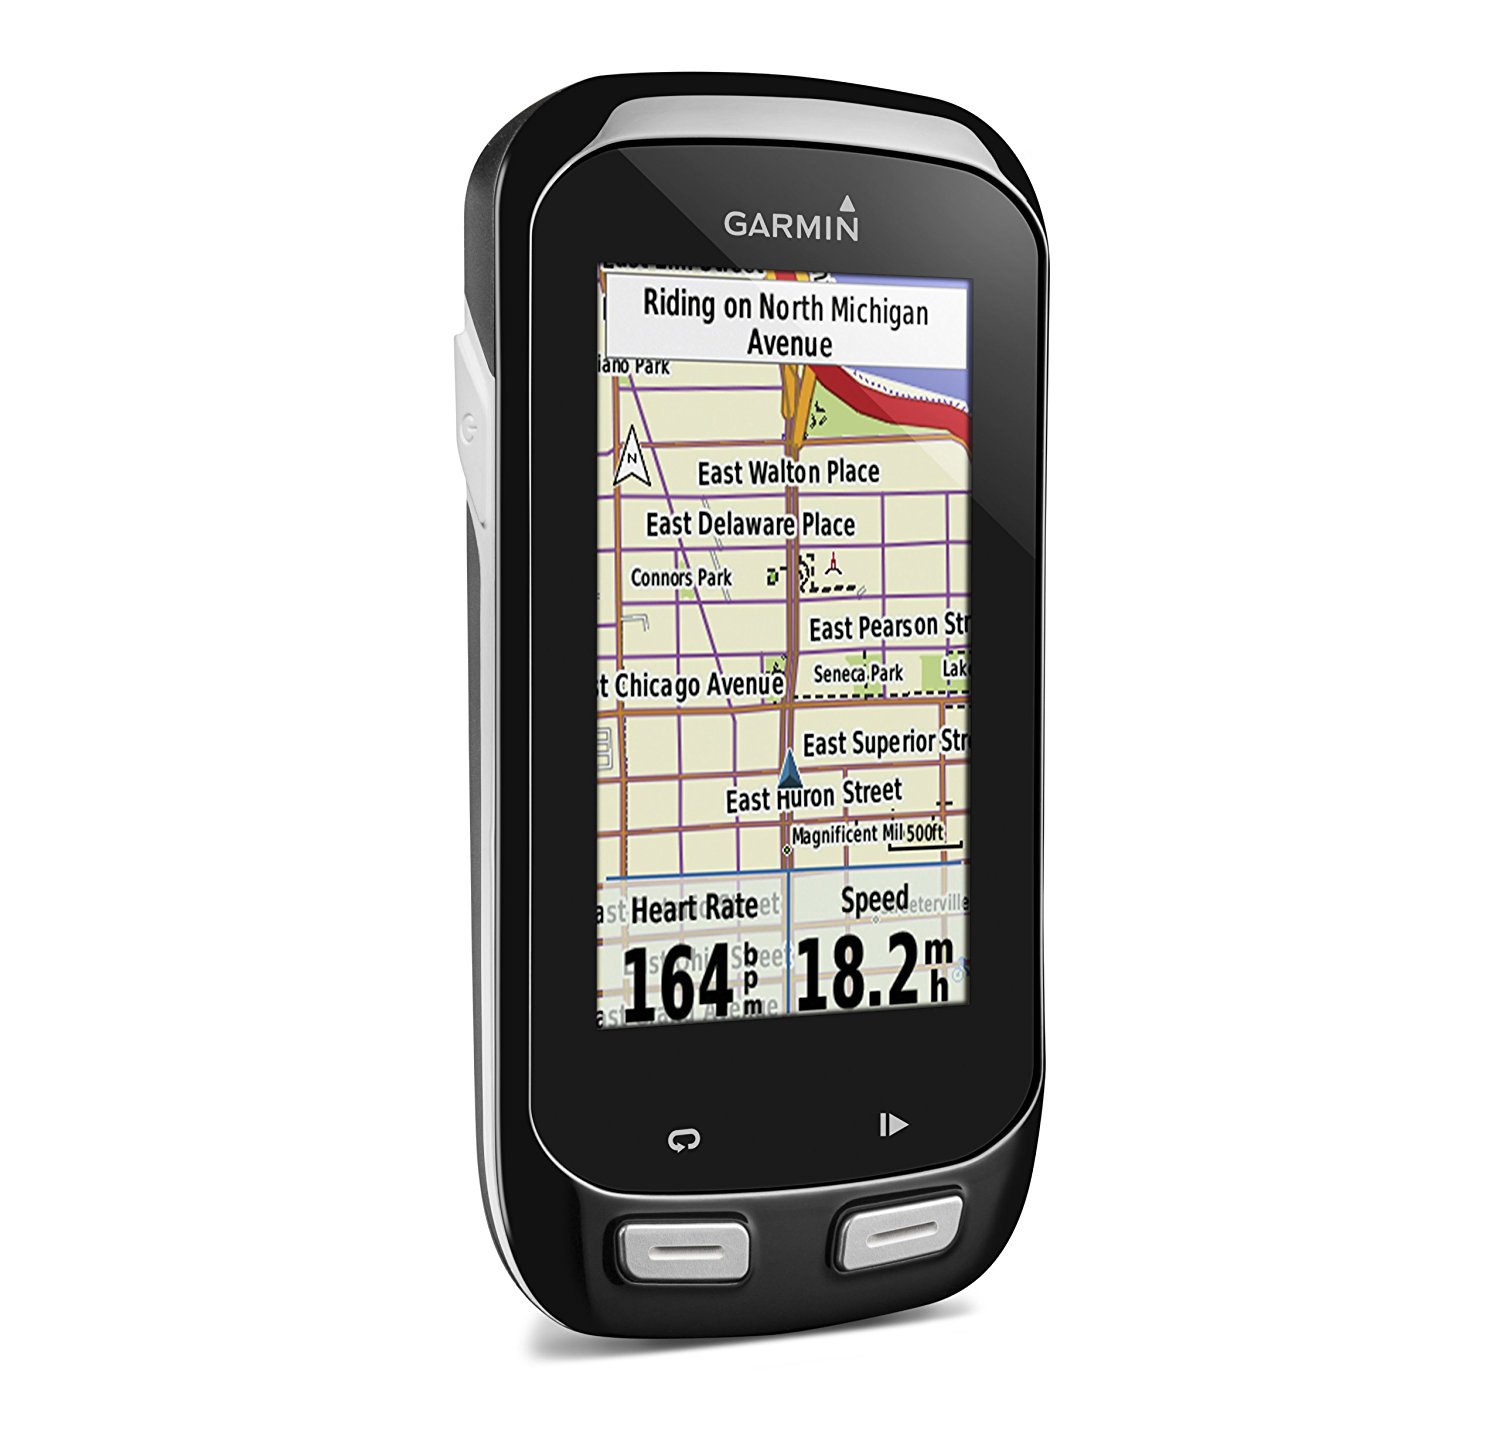 Garmin Edge 1000 GPS Heart Rate Monitor Review